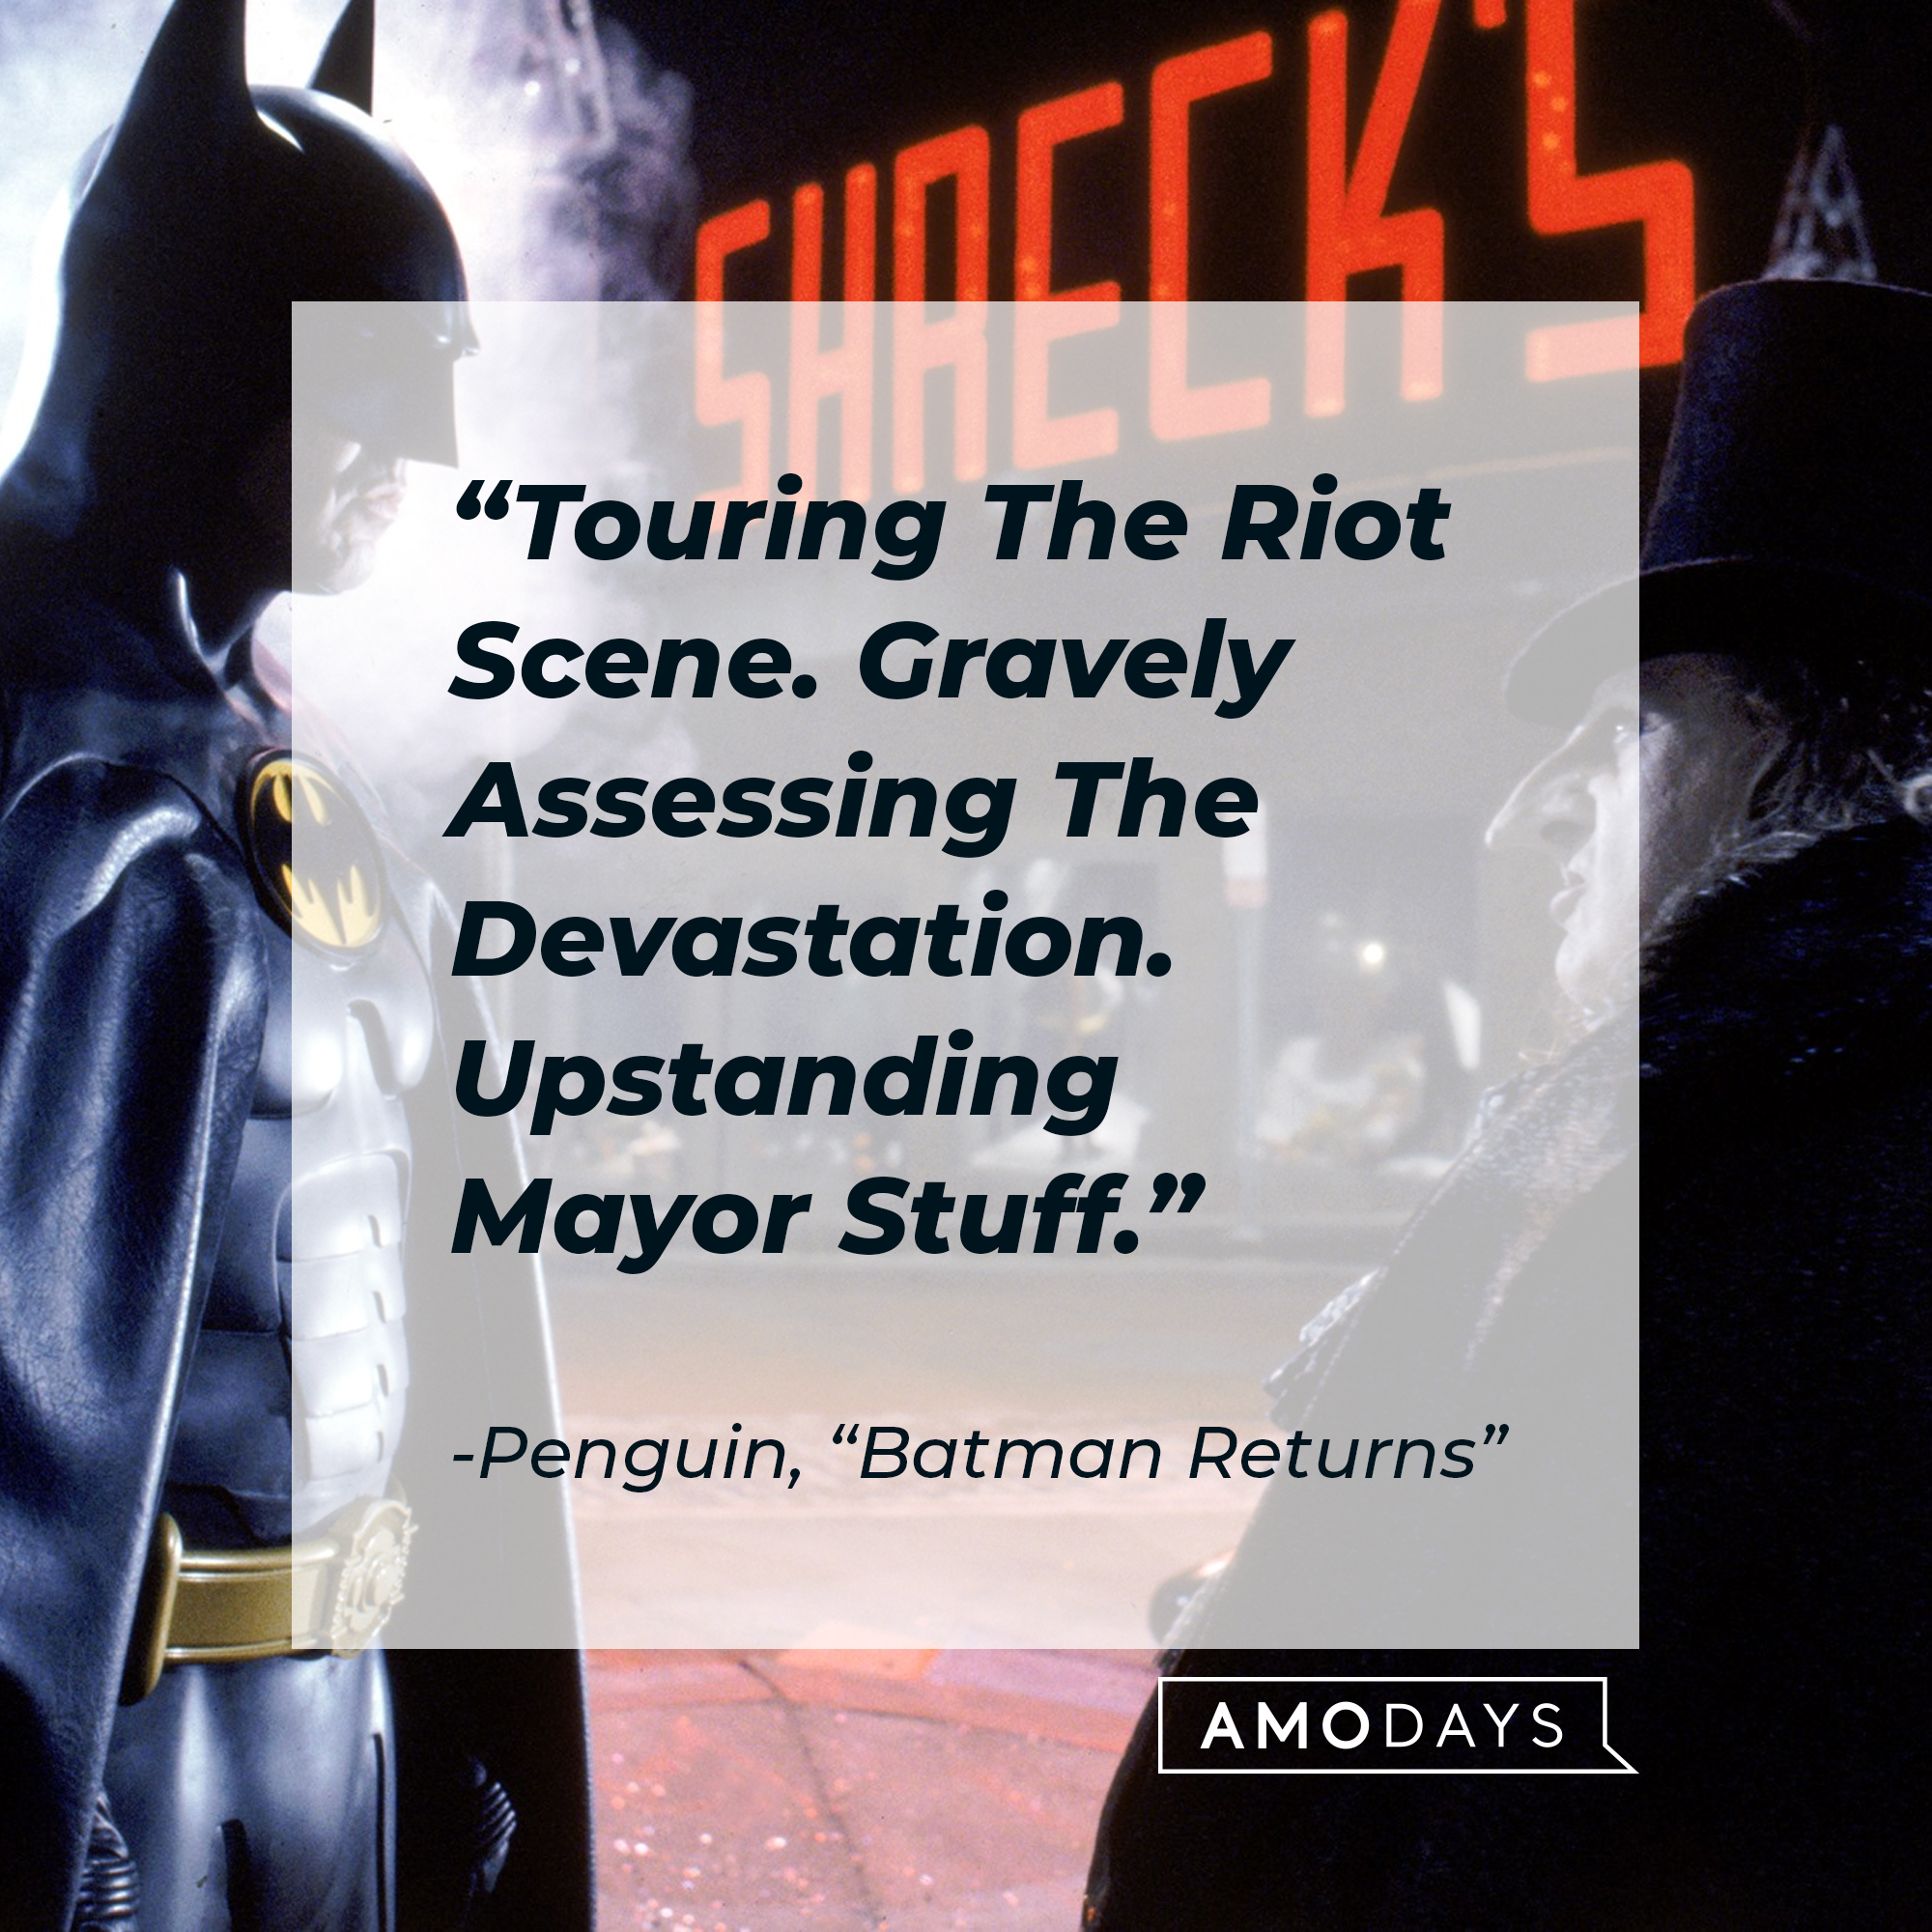 Penguin's quote from "Batman Returns" : "Touring The Riot Scene. Gravely Assessing The Devastation. Upstanding Mayor Stuff." | Source: facebook.com/BatmanReturnsFilm